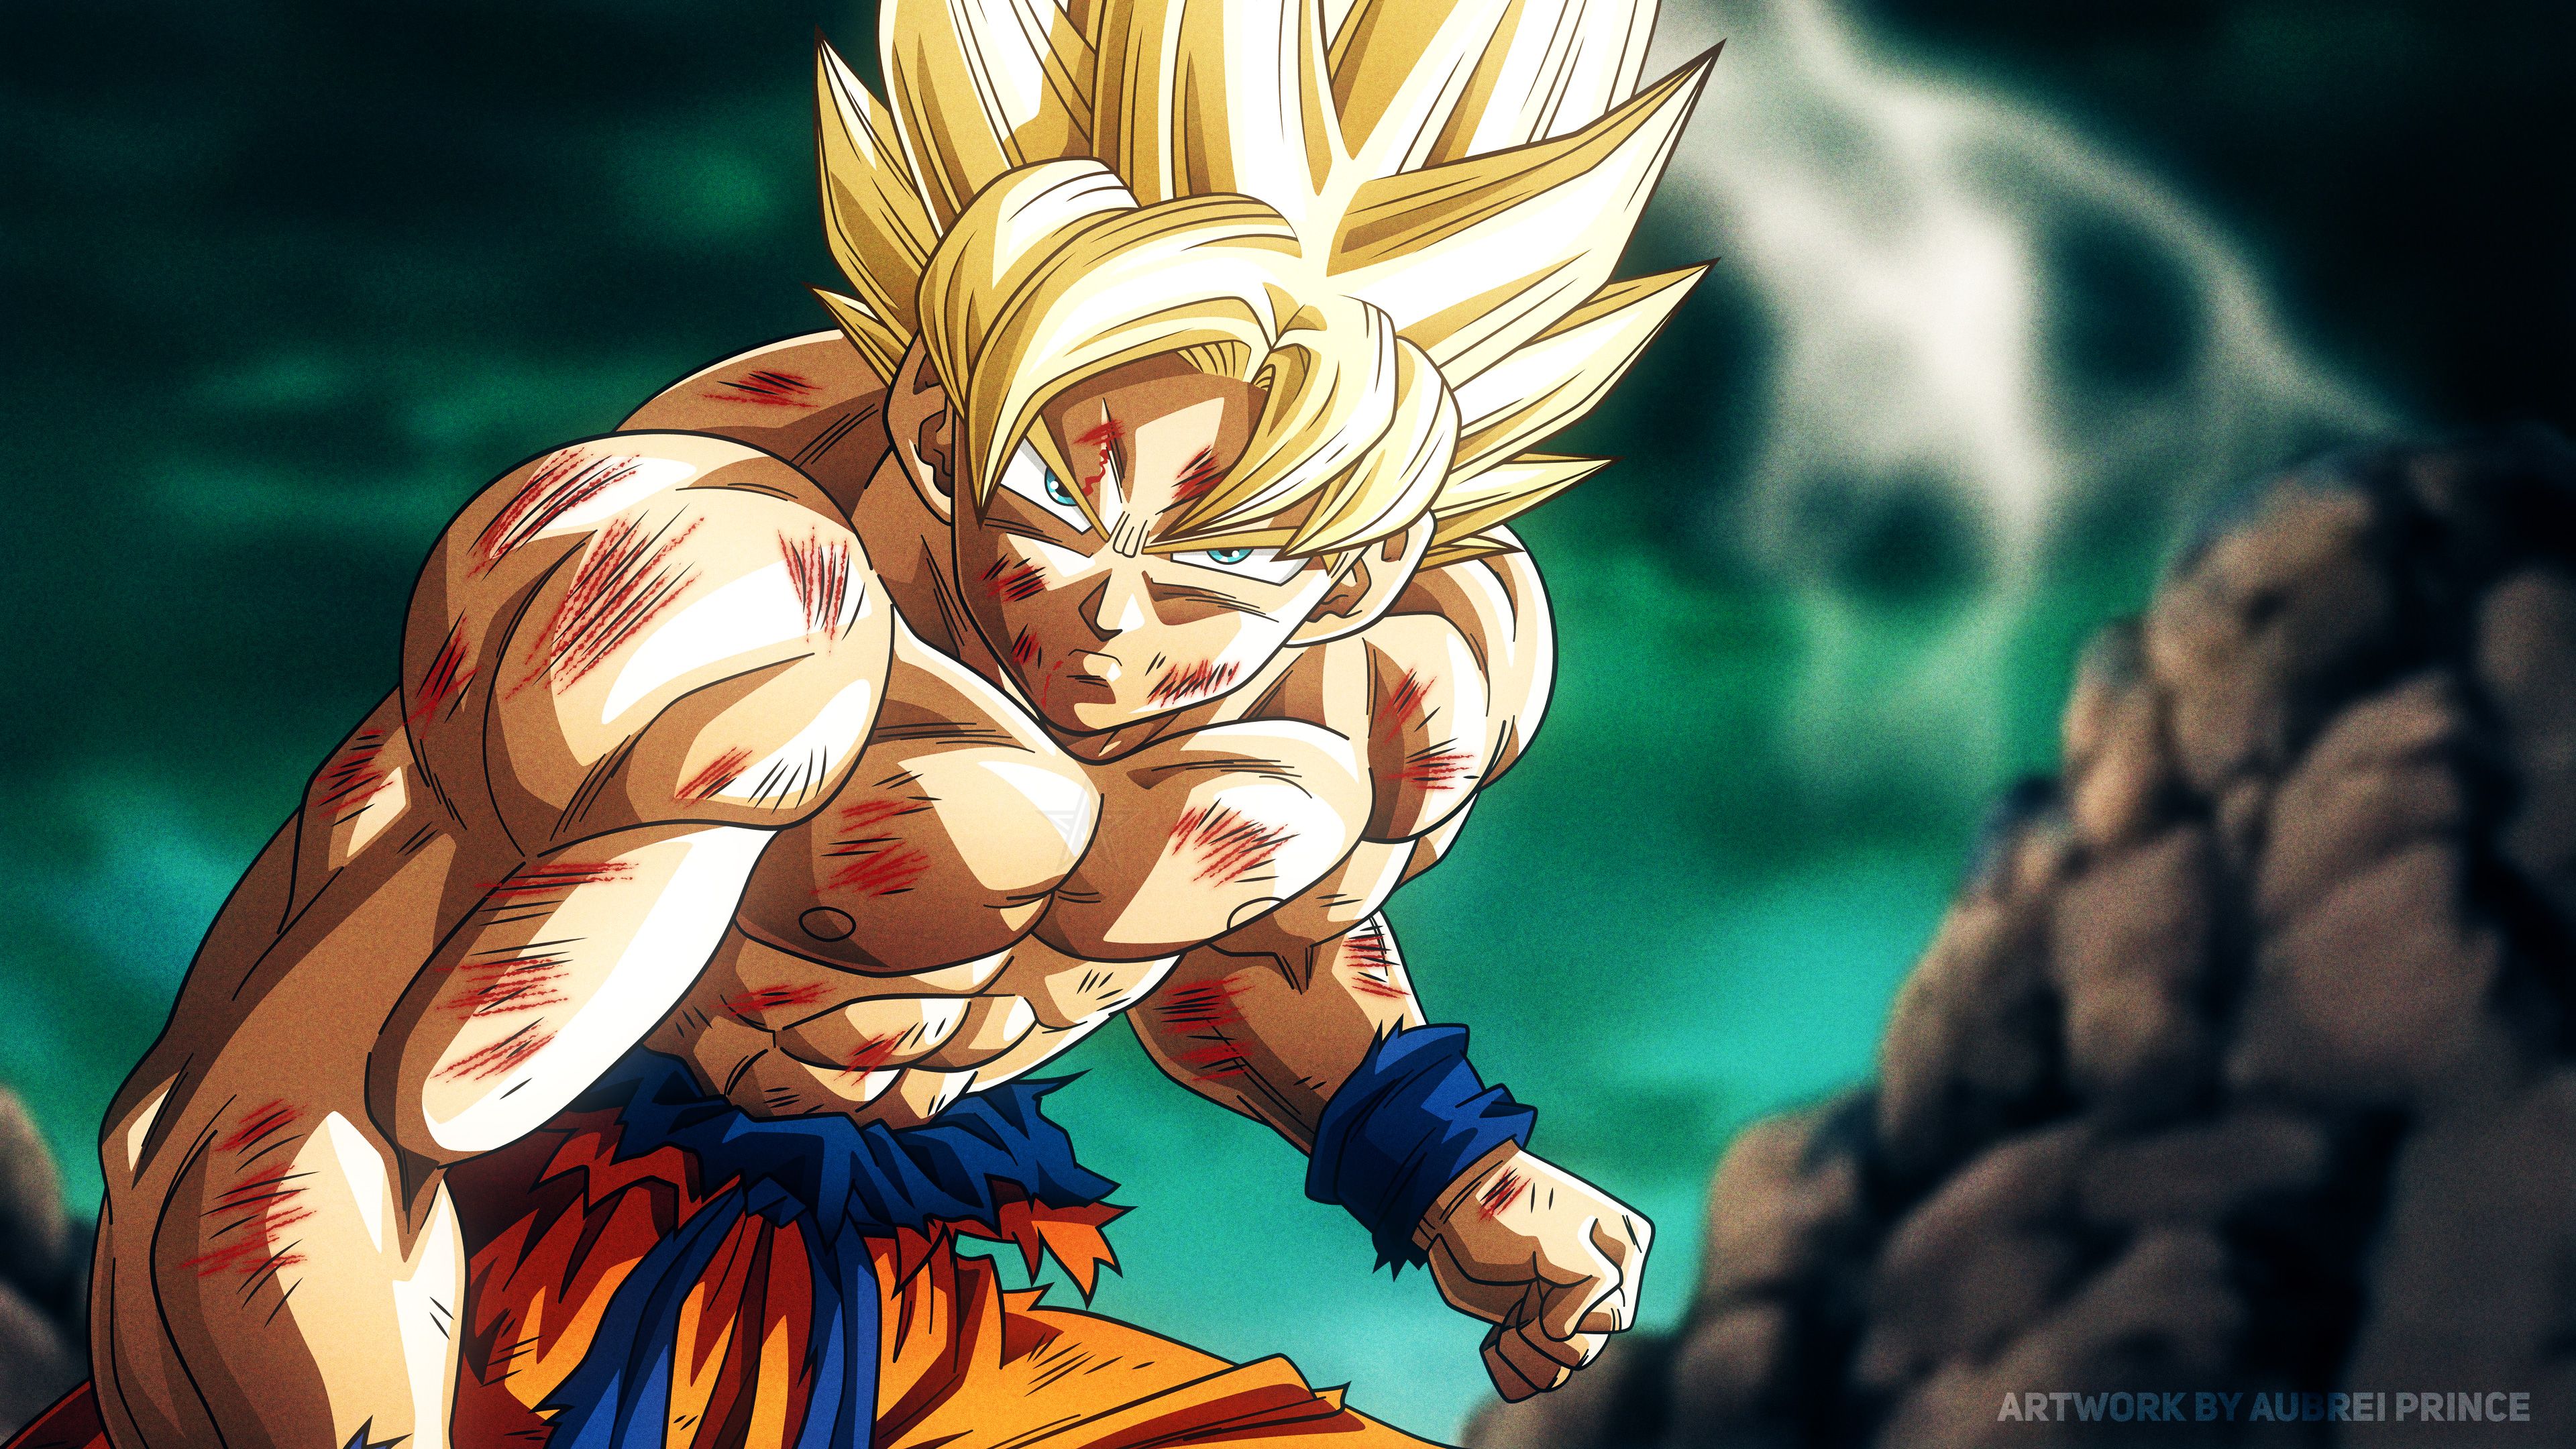 Super Saiyan Son Goku Dragon Ball Z 4k, HD Anime, 4k Wallpapers, Image, Backgrounds, Photos and Pictures